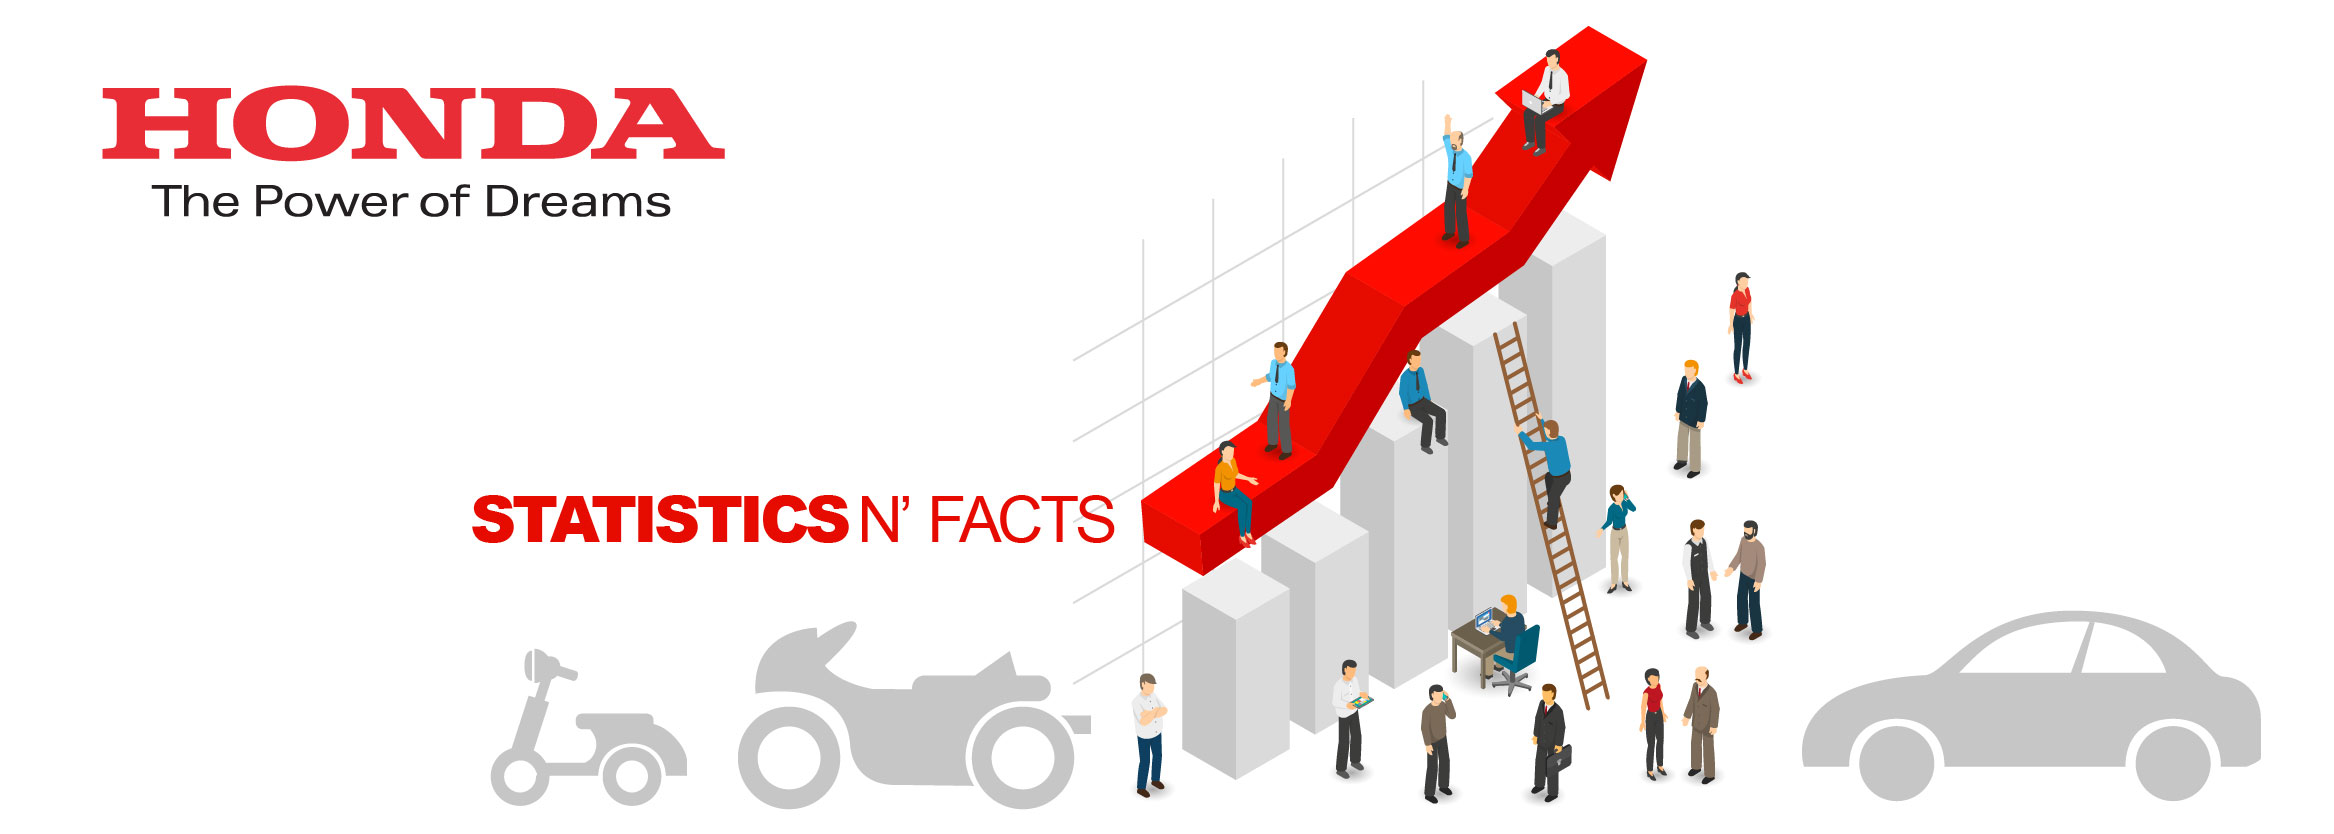 honda statistics and facts